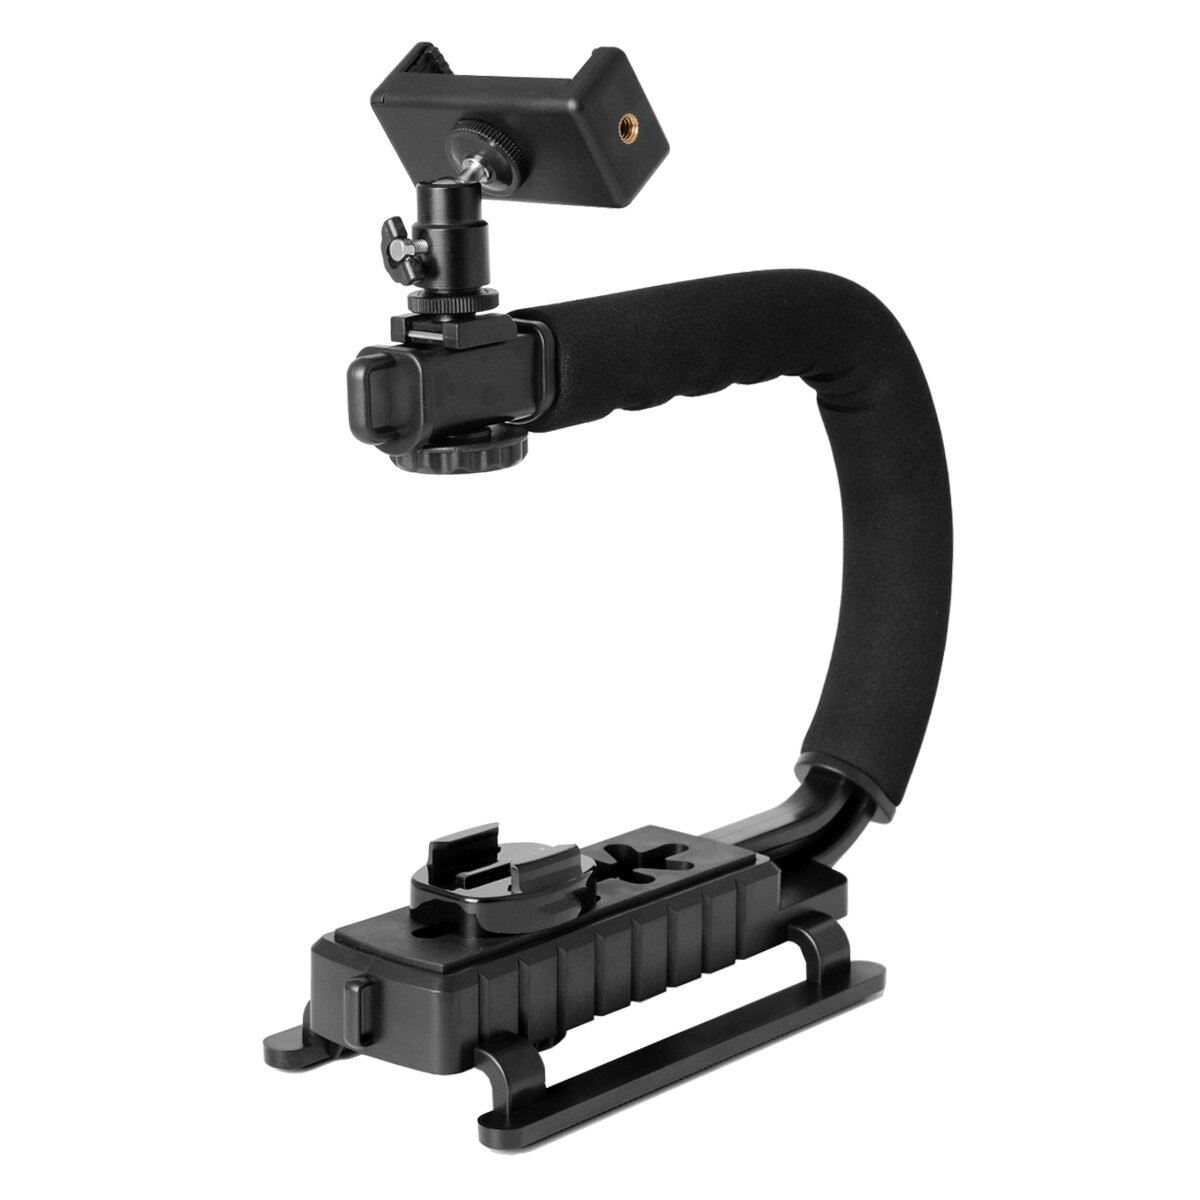 U-Rig Handheld phone Stabilizing Photography Video Rig Film Making Vlogging Recording Case Bracket Stabilizer for iPhone Samsung: kit